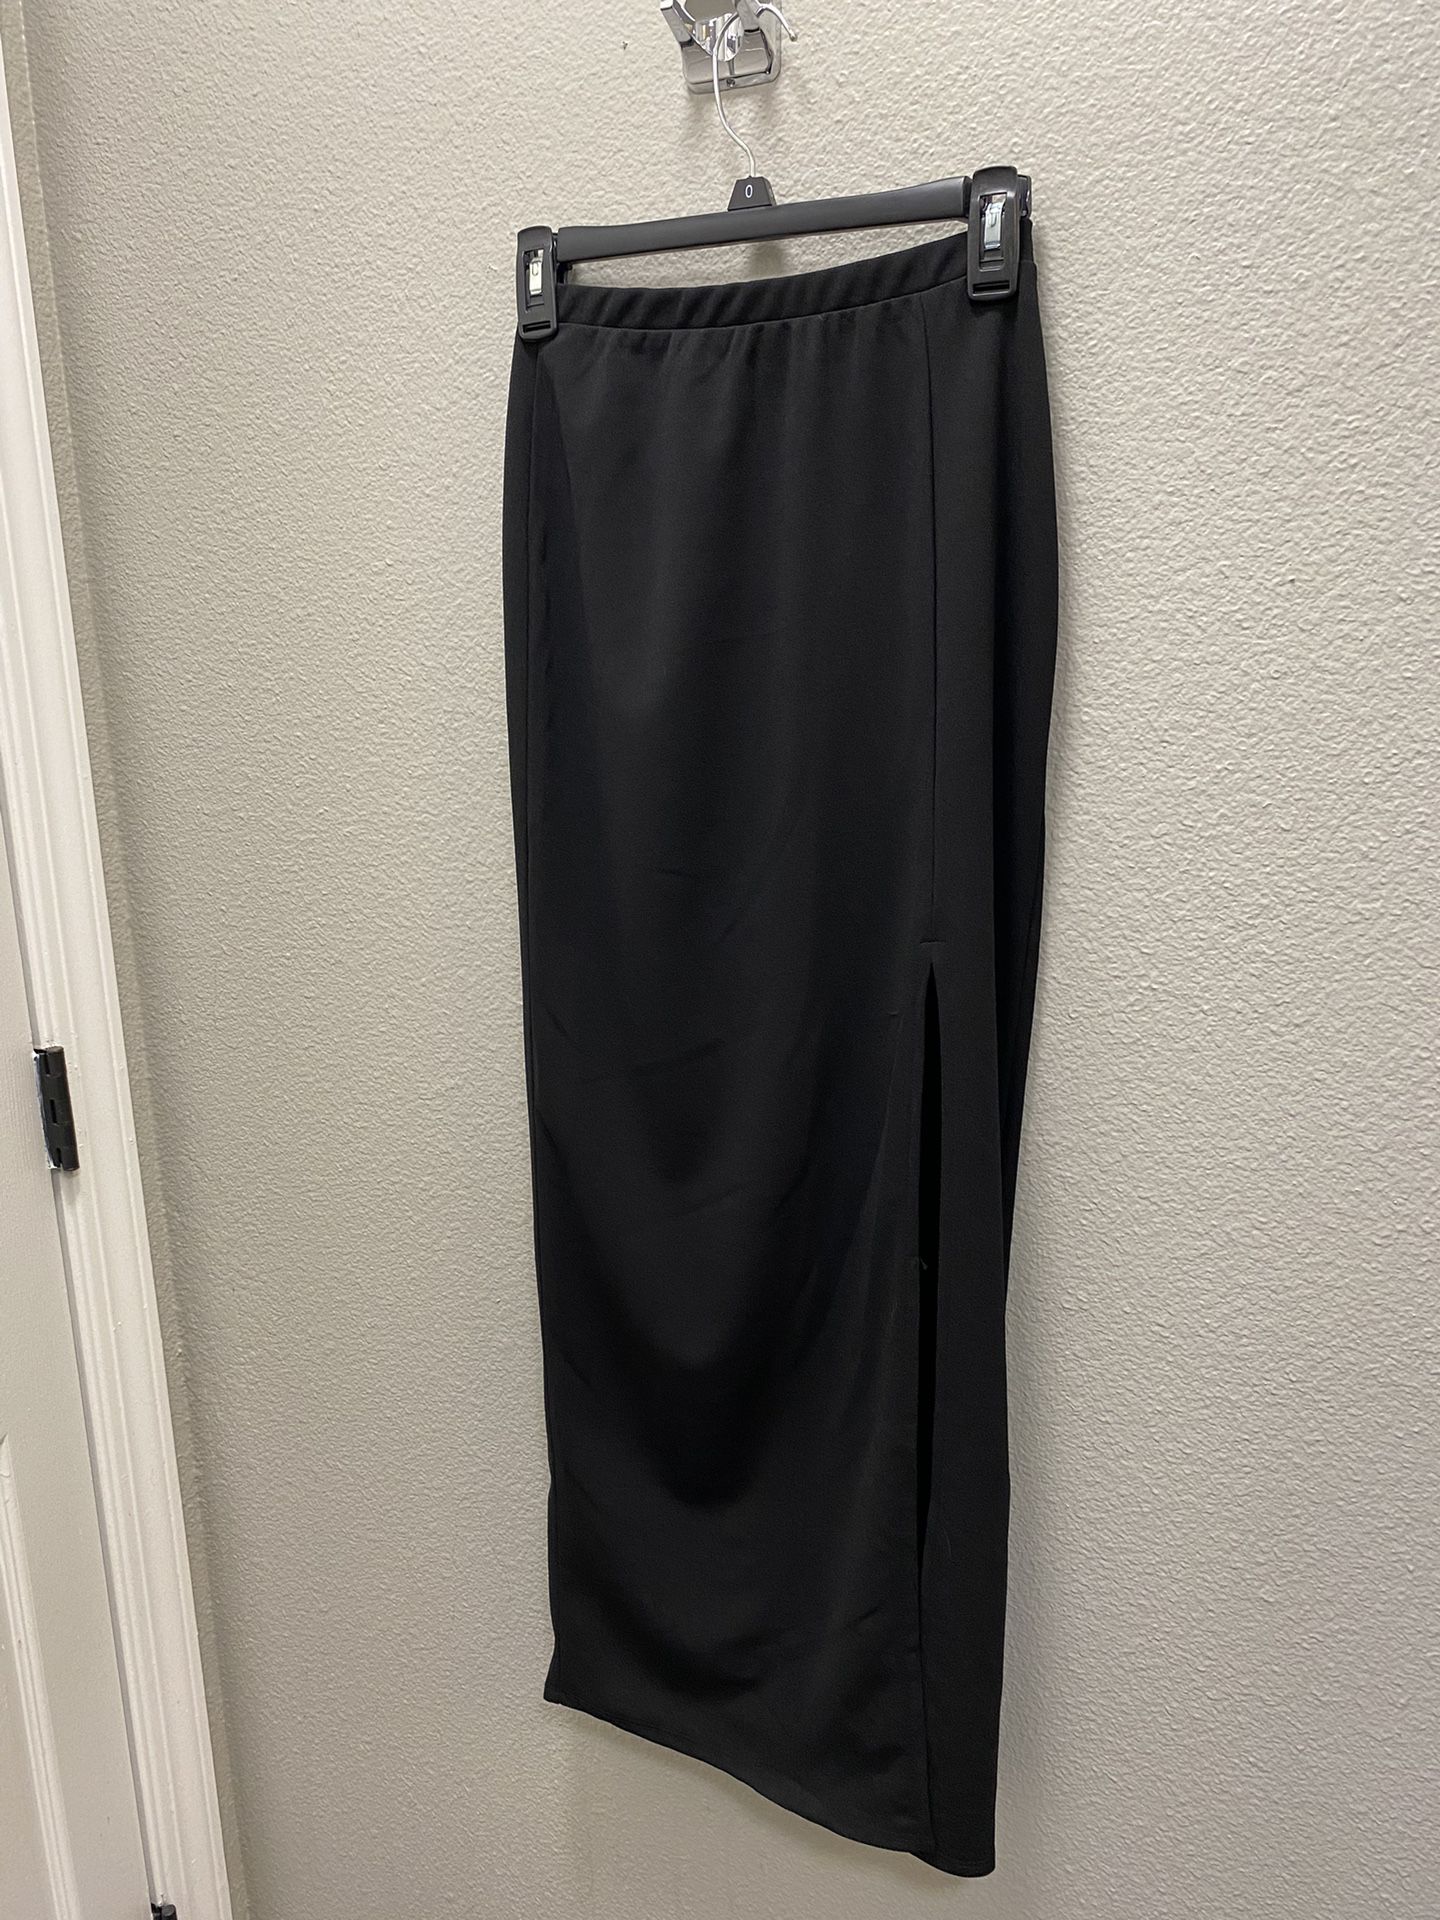 Size S Black Skirt With Slit